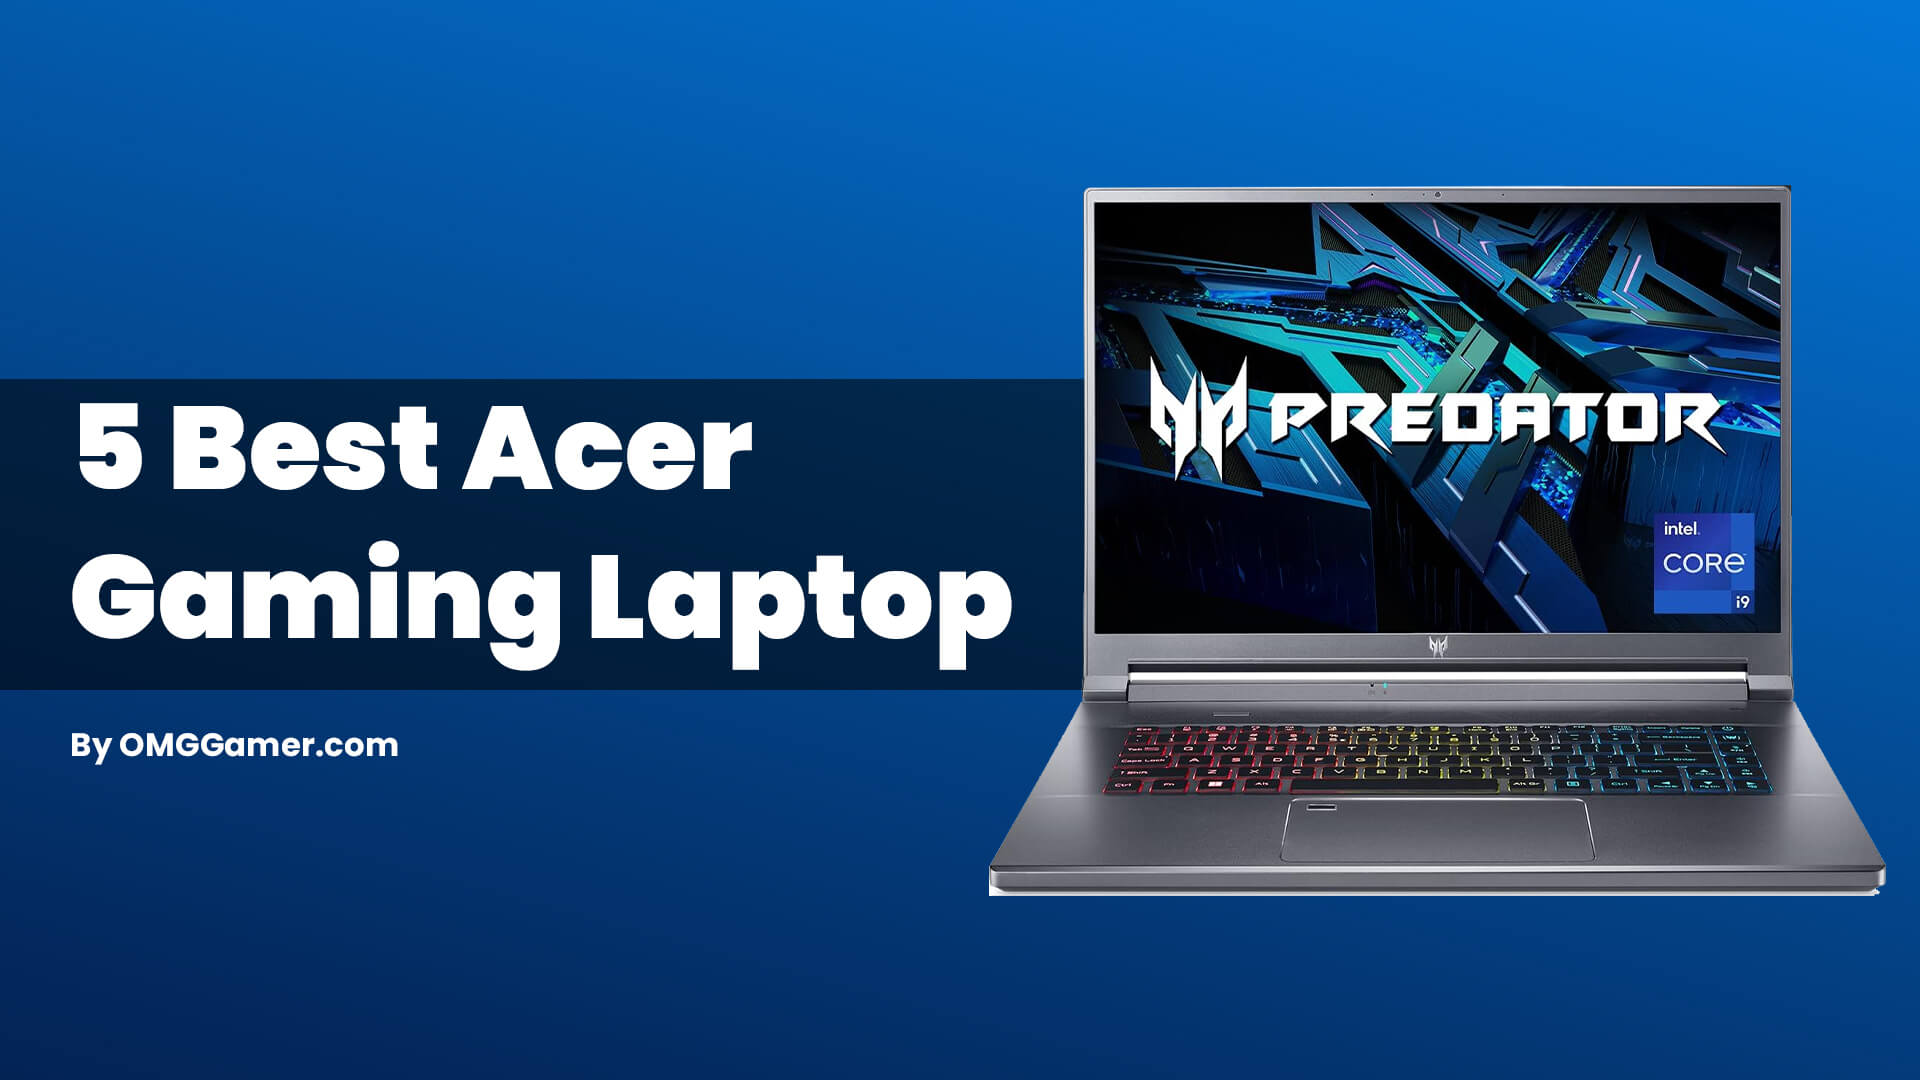 Best-Acer-Gaming-Laptop-Gamer-Choice